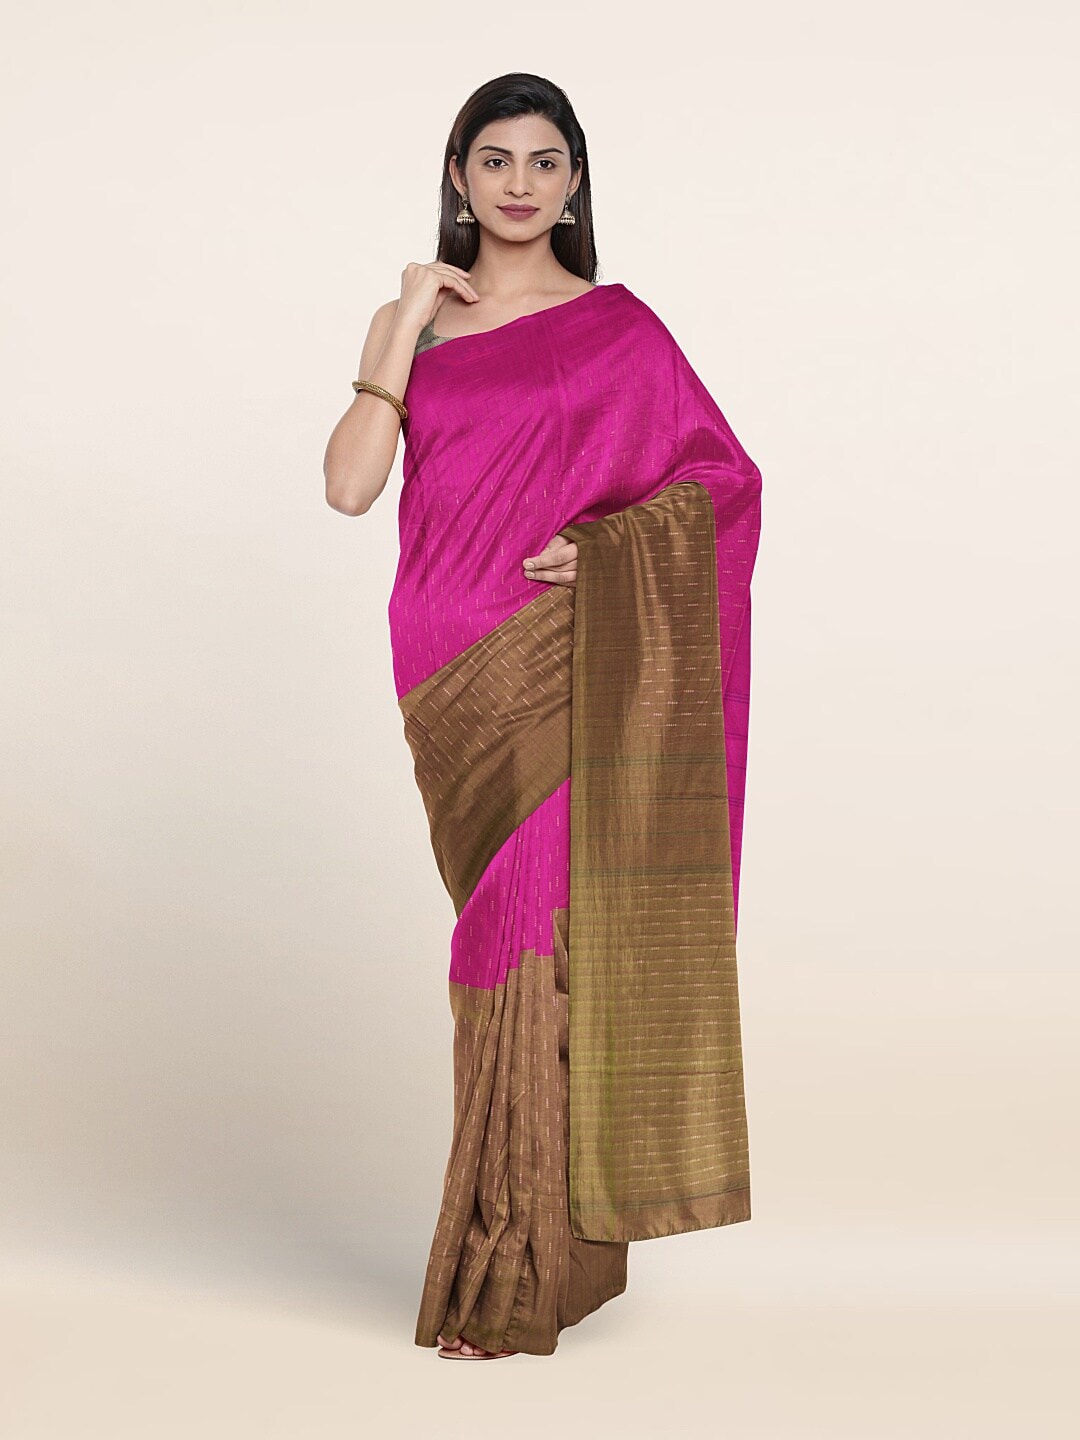 Pothys Woven Design Zari Art Silk Saree Price in India